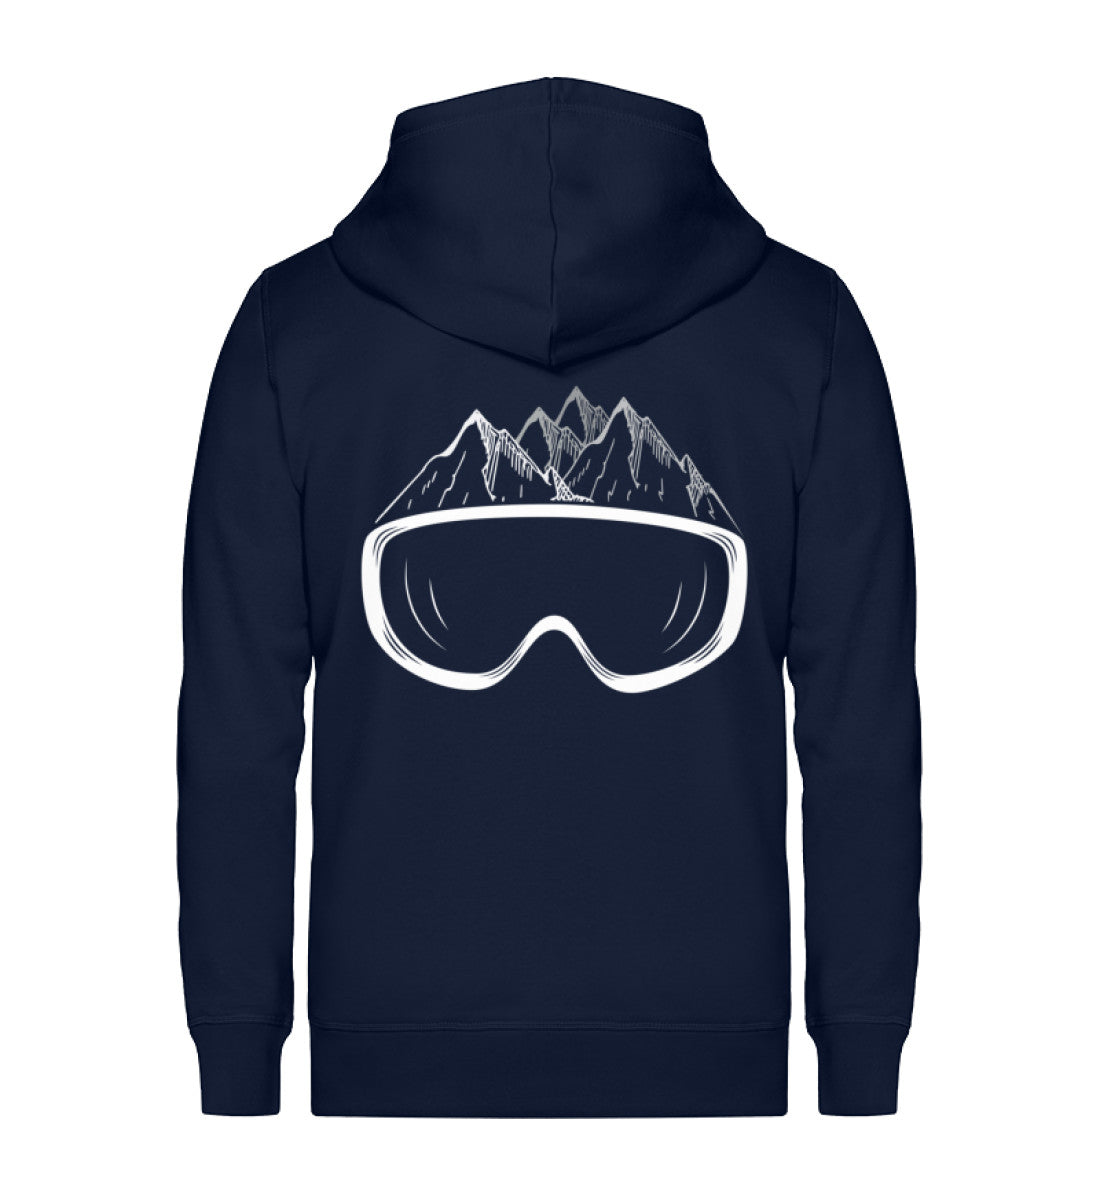 Wintersporteln - Unisex Premium Organic Sweatjacke klettern ski Navyblau